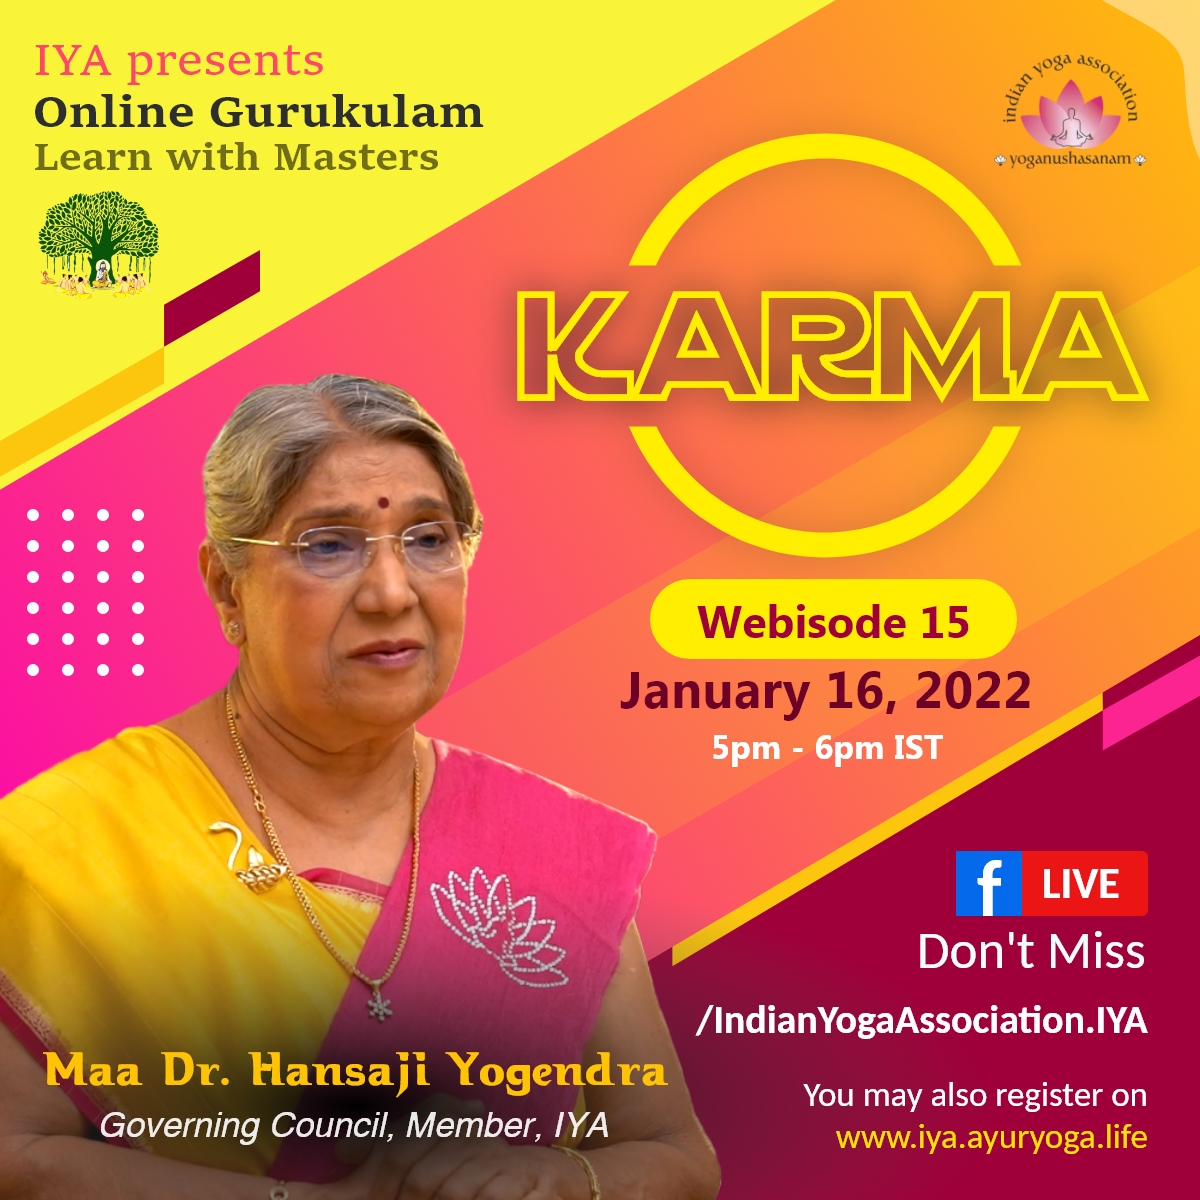 Online Gurukulam